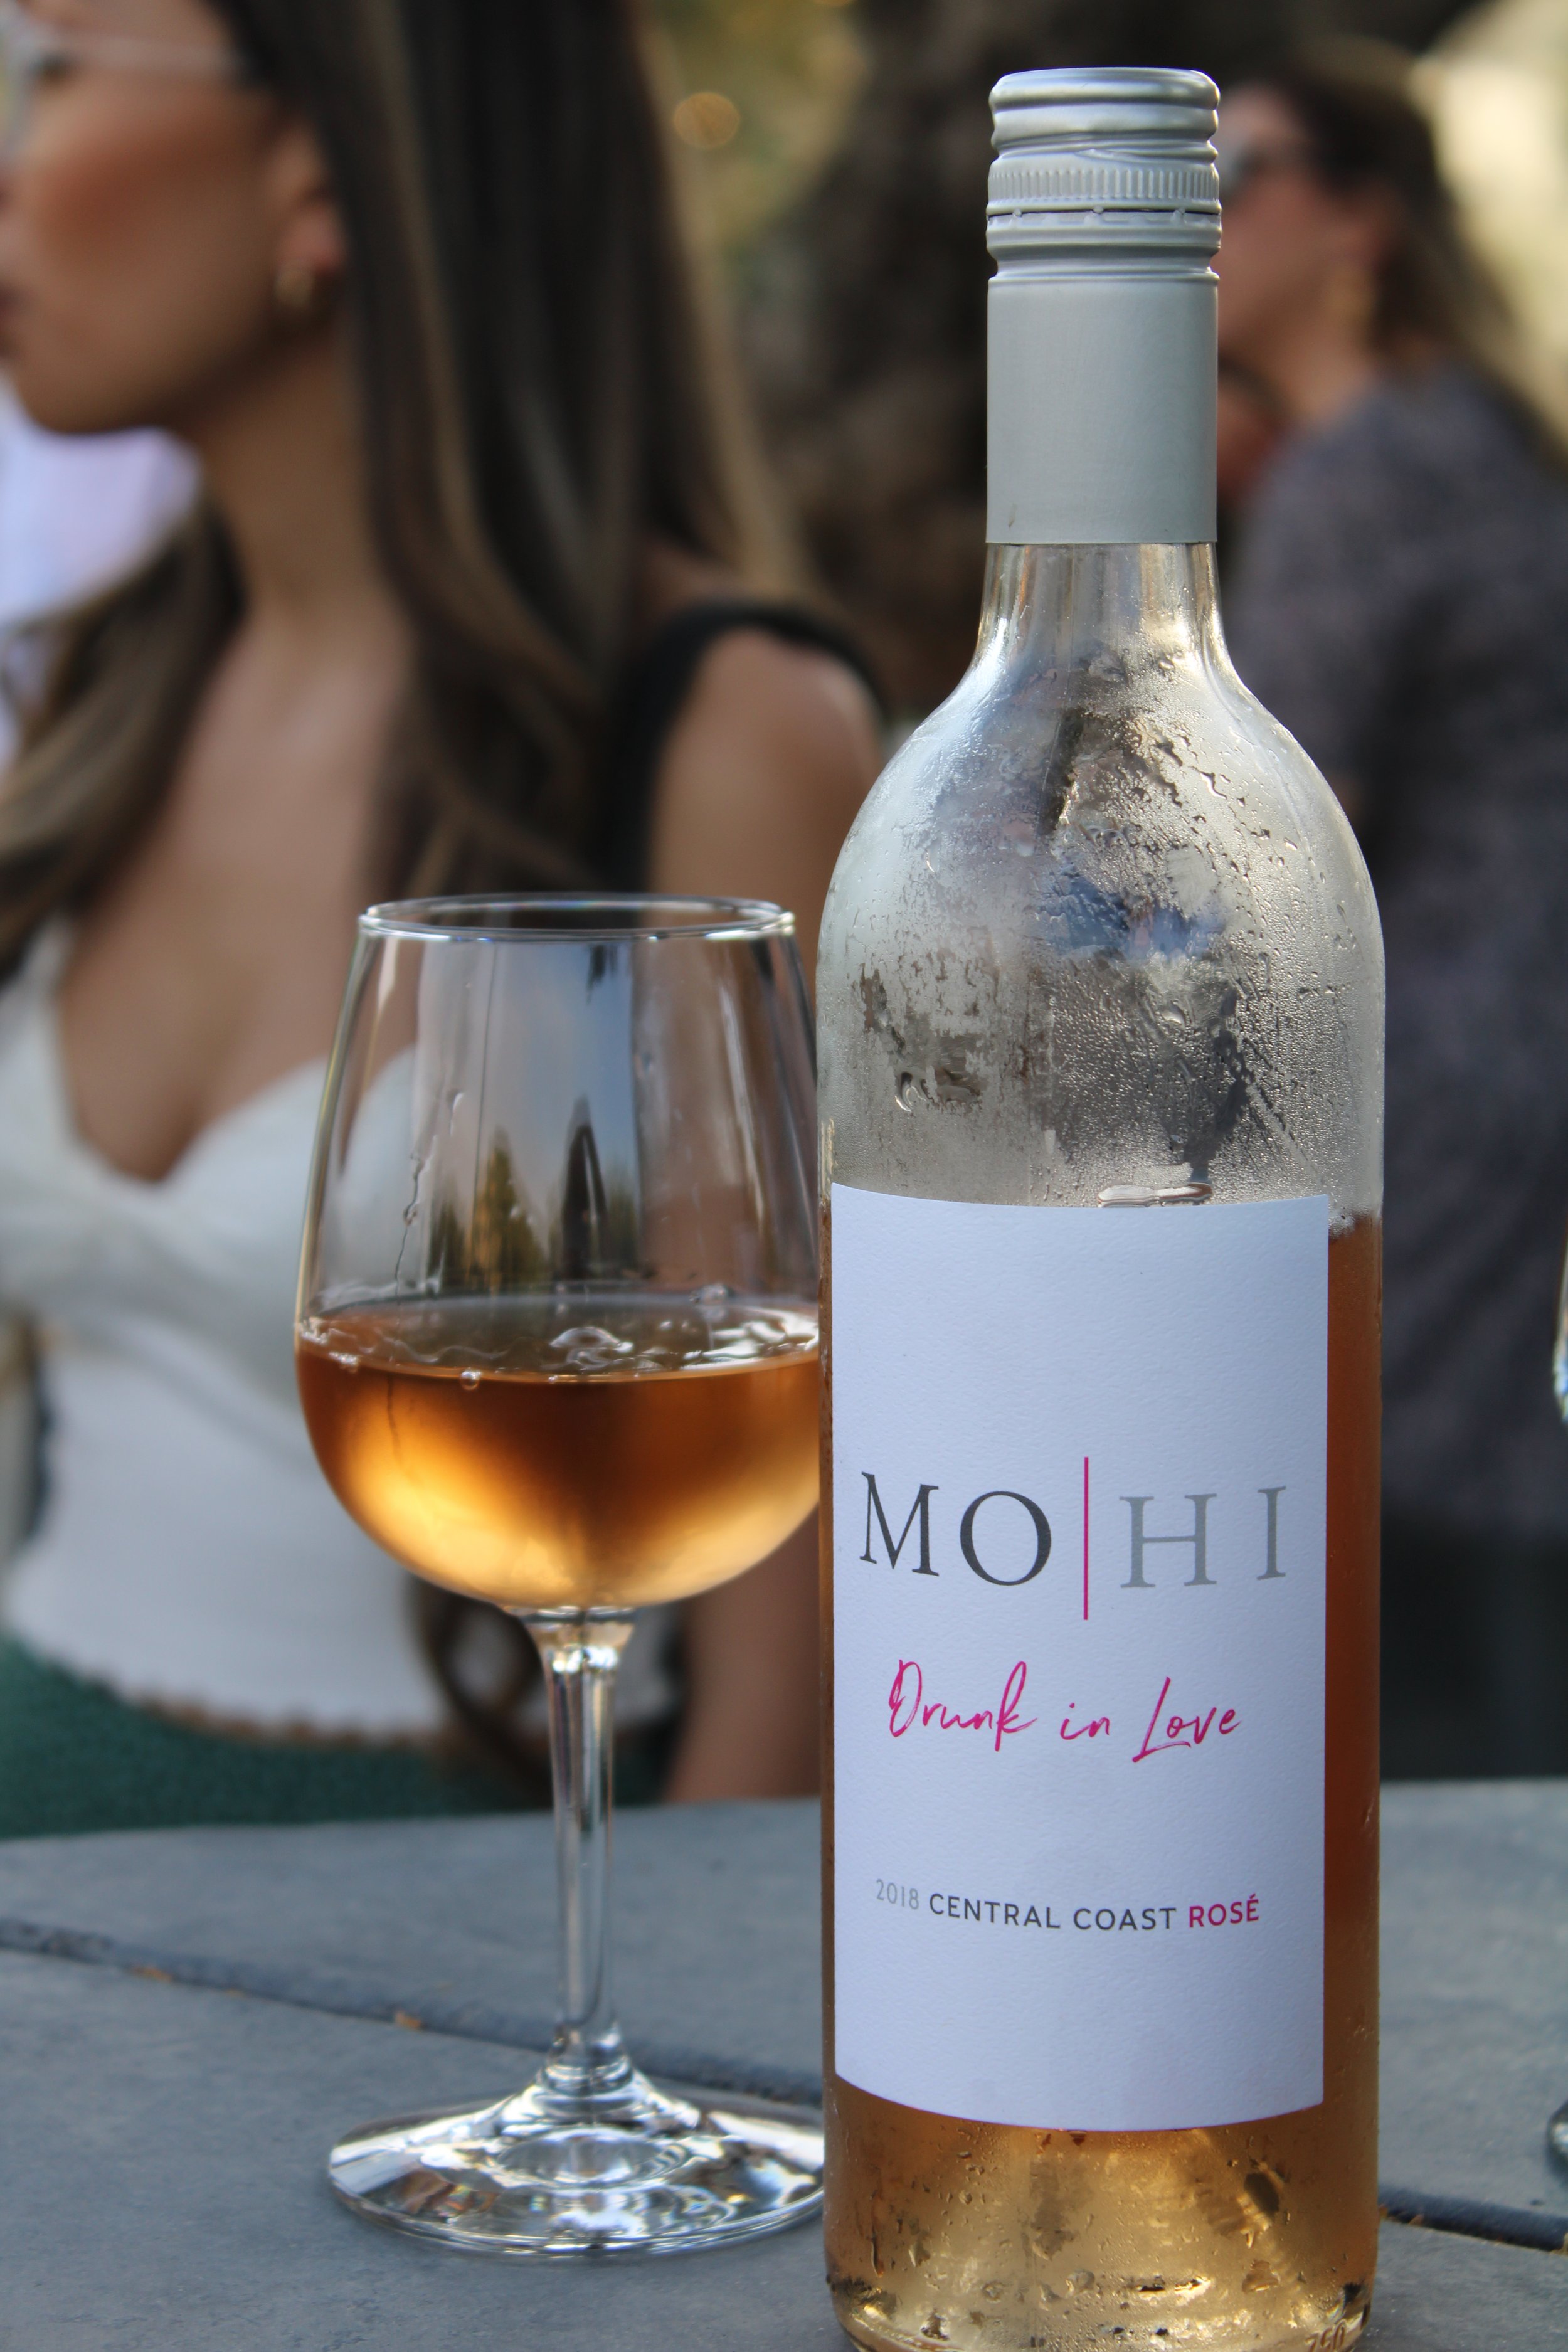 Mohi wine image #5.jpg